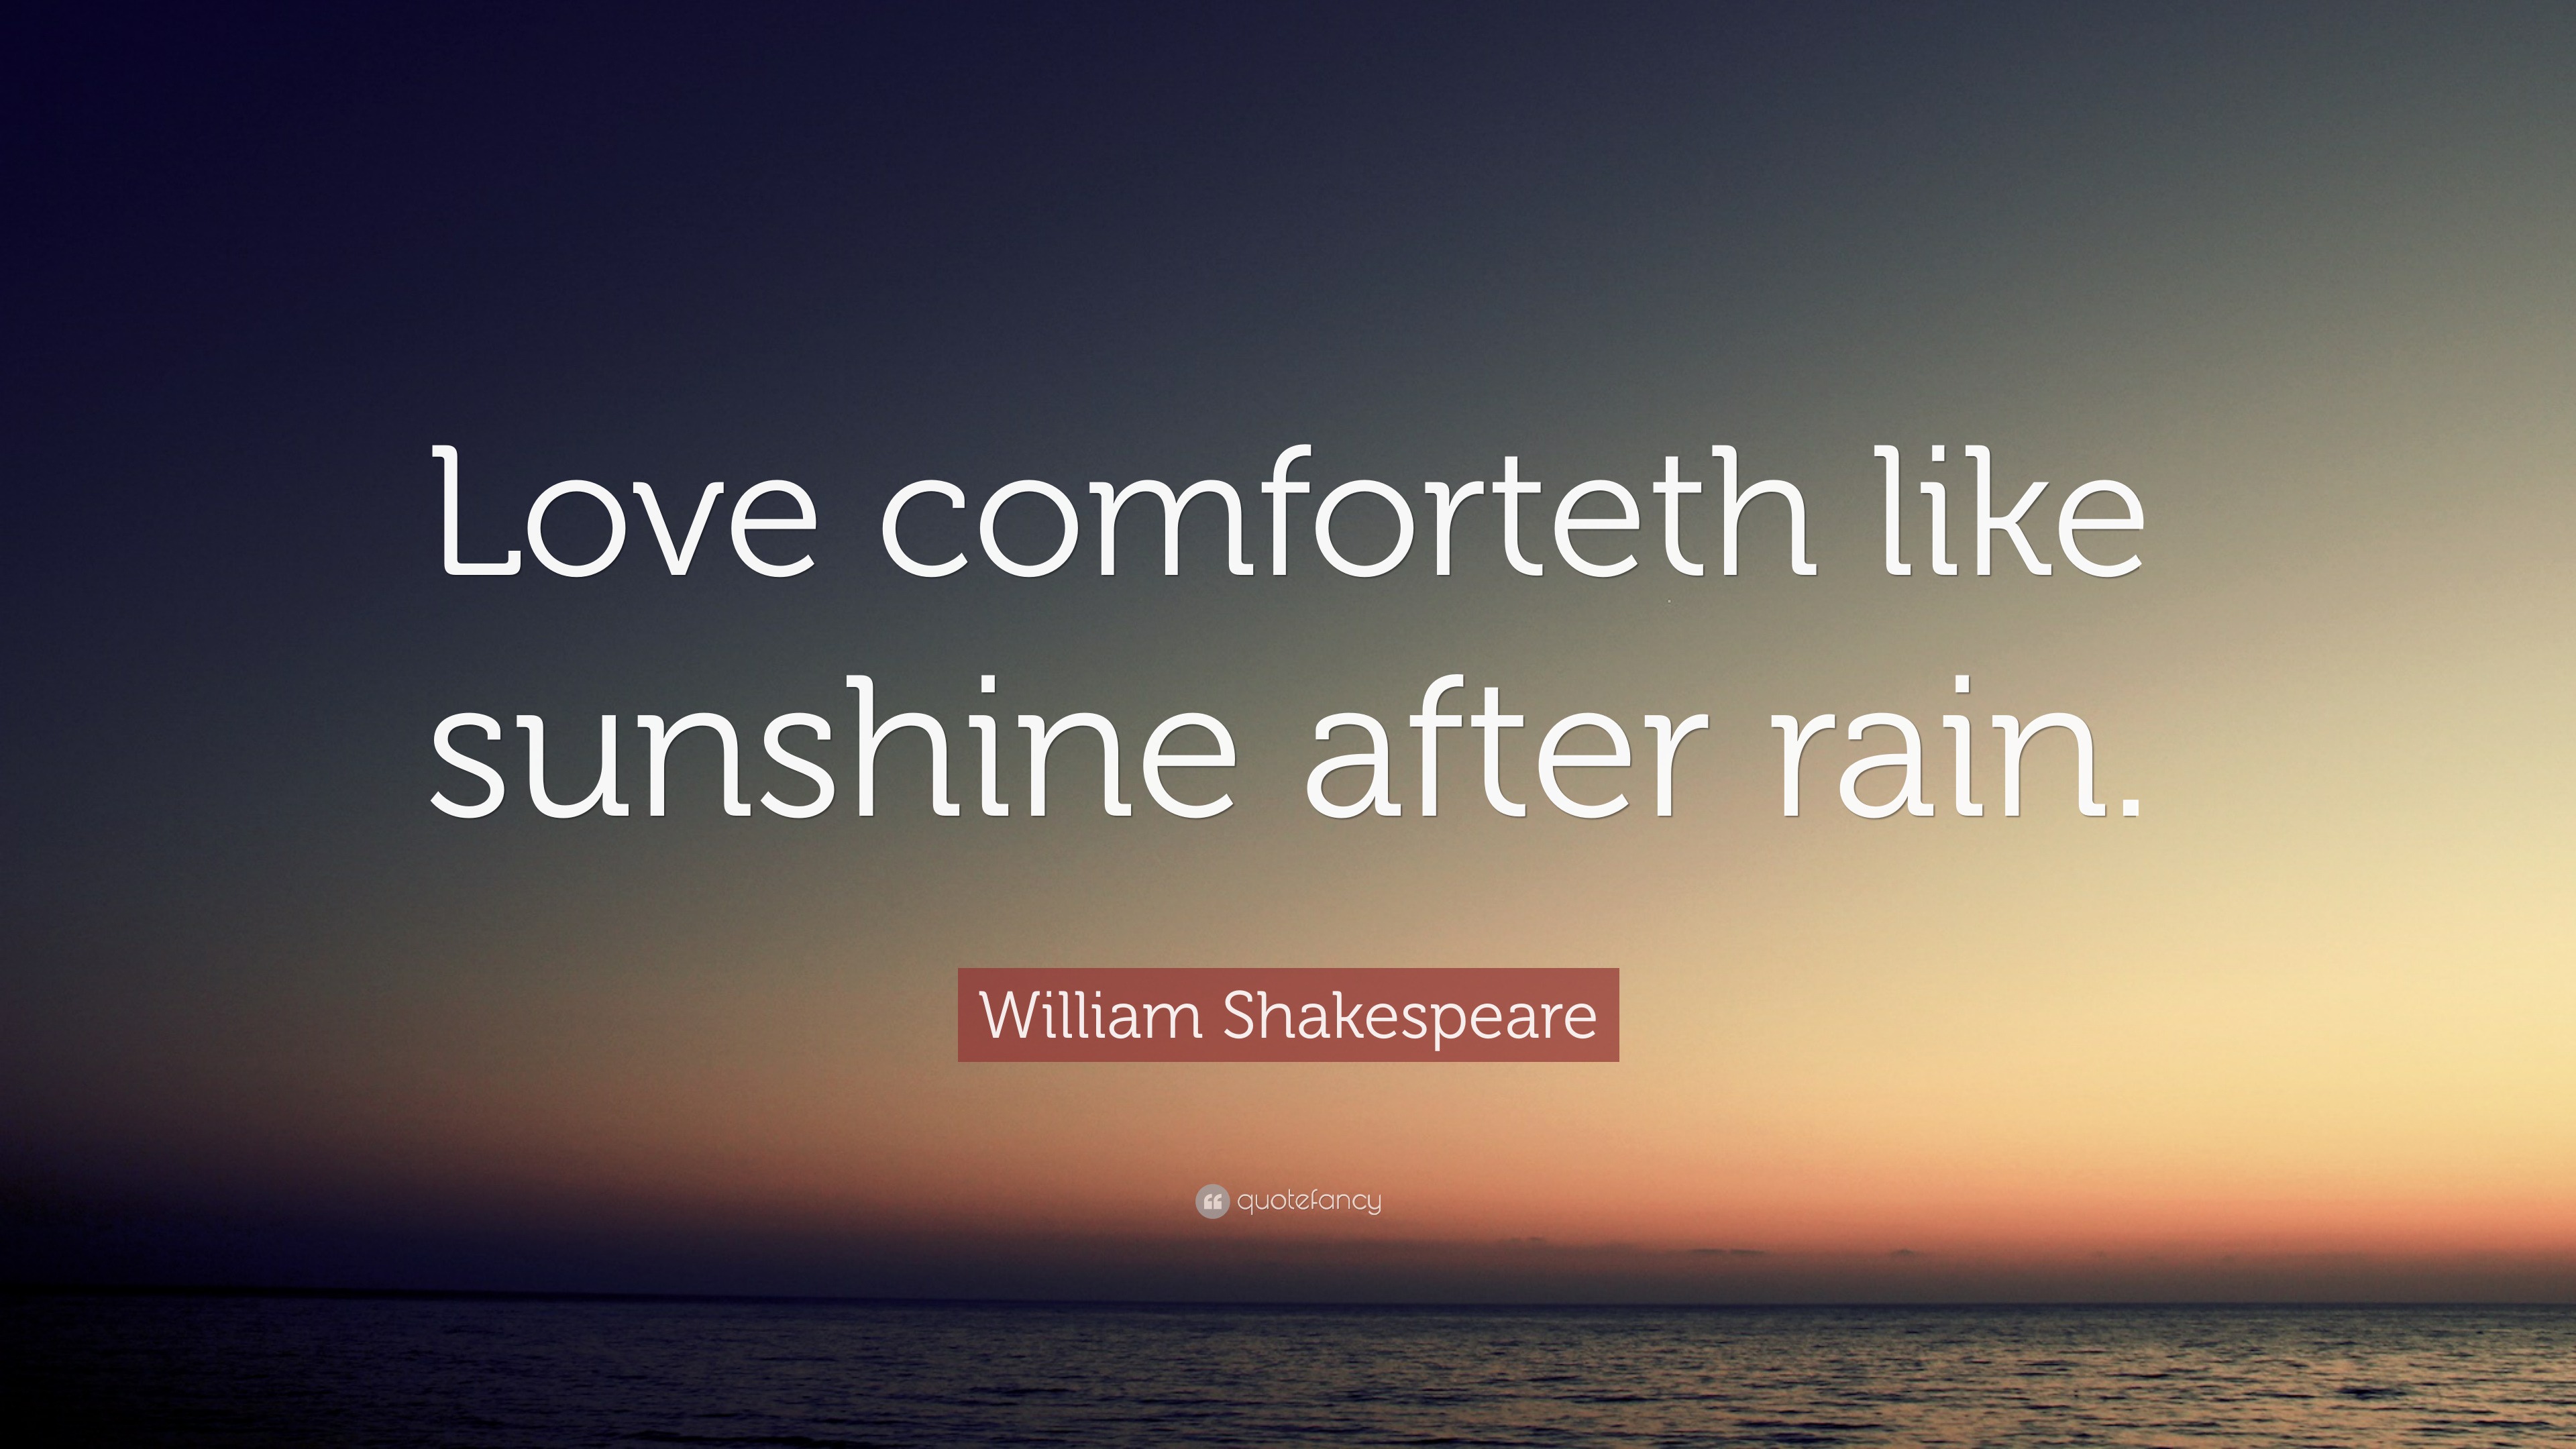 William Shakespeare Quote: "Love comforteth like sunshine ...